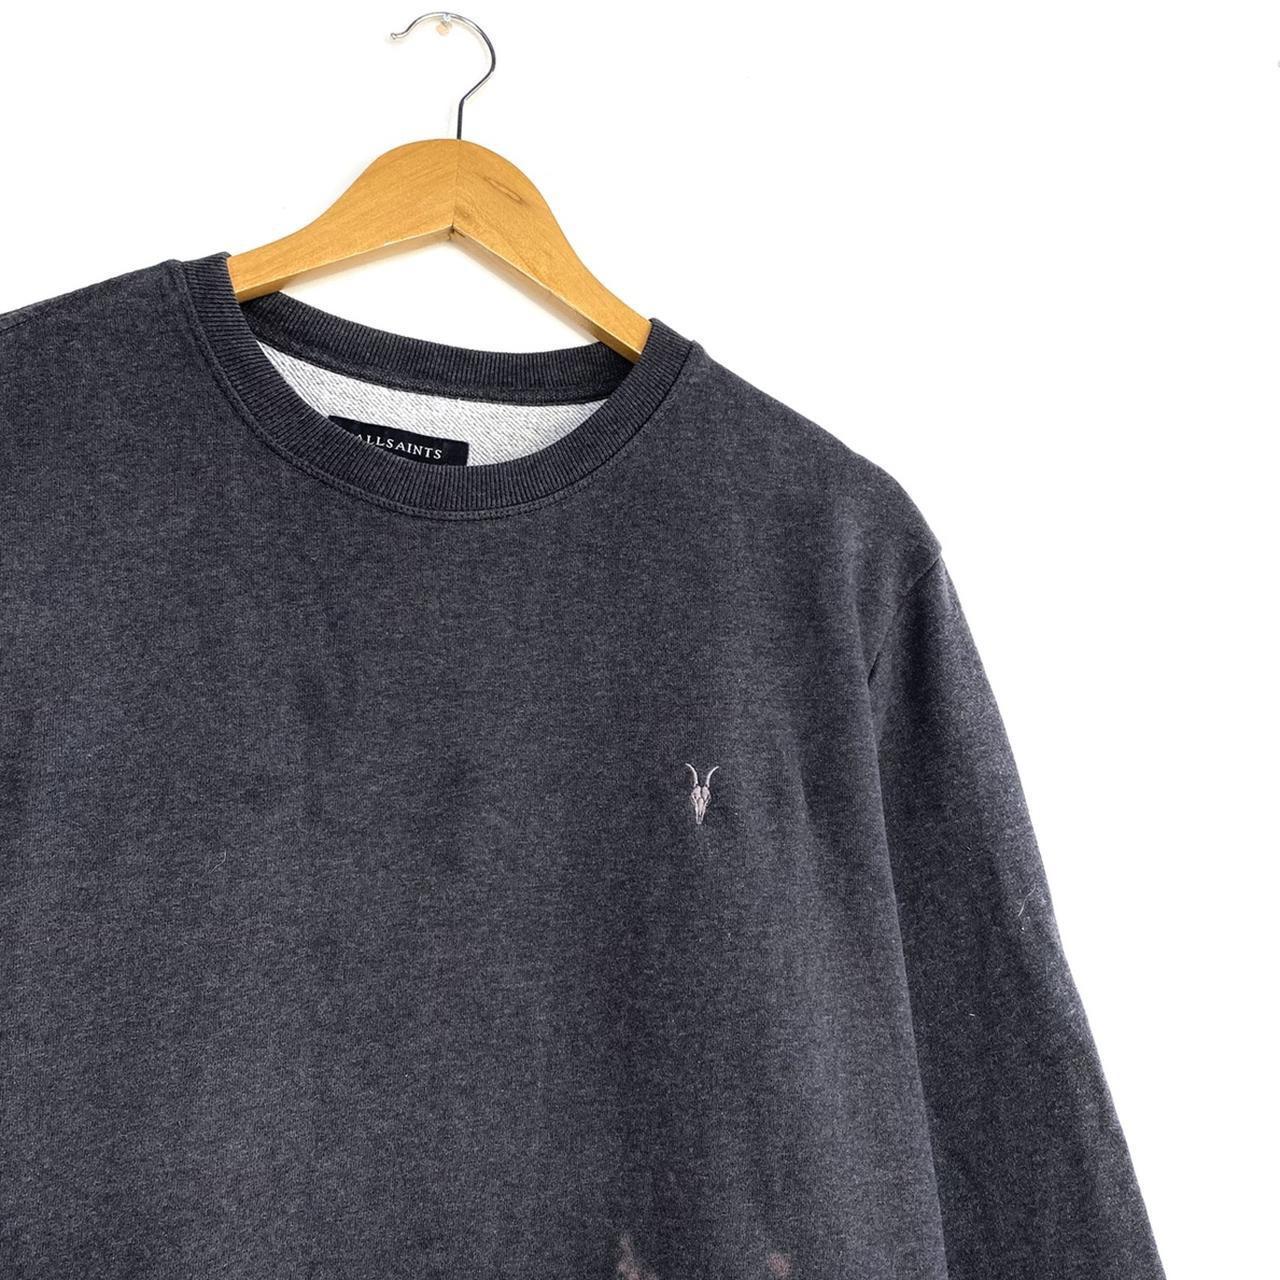 All saints sweatshirt - size medium - grey colourway... - Depop